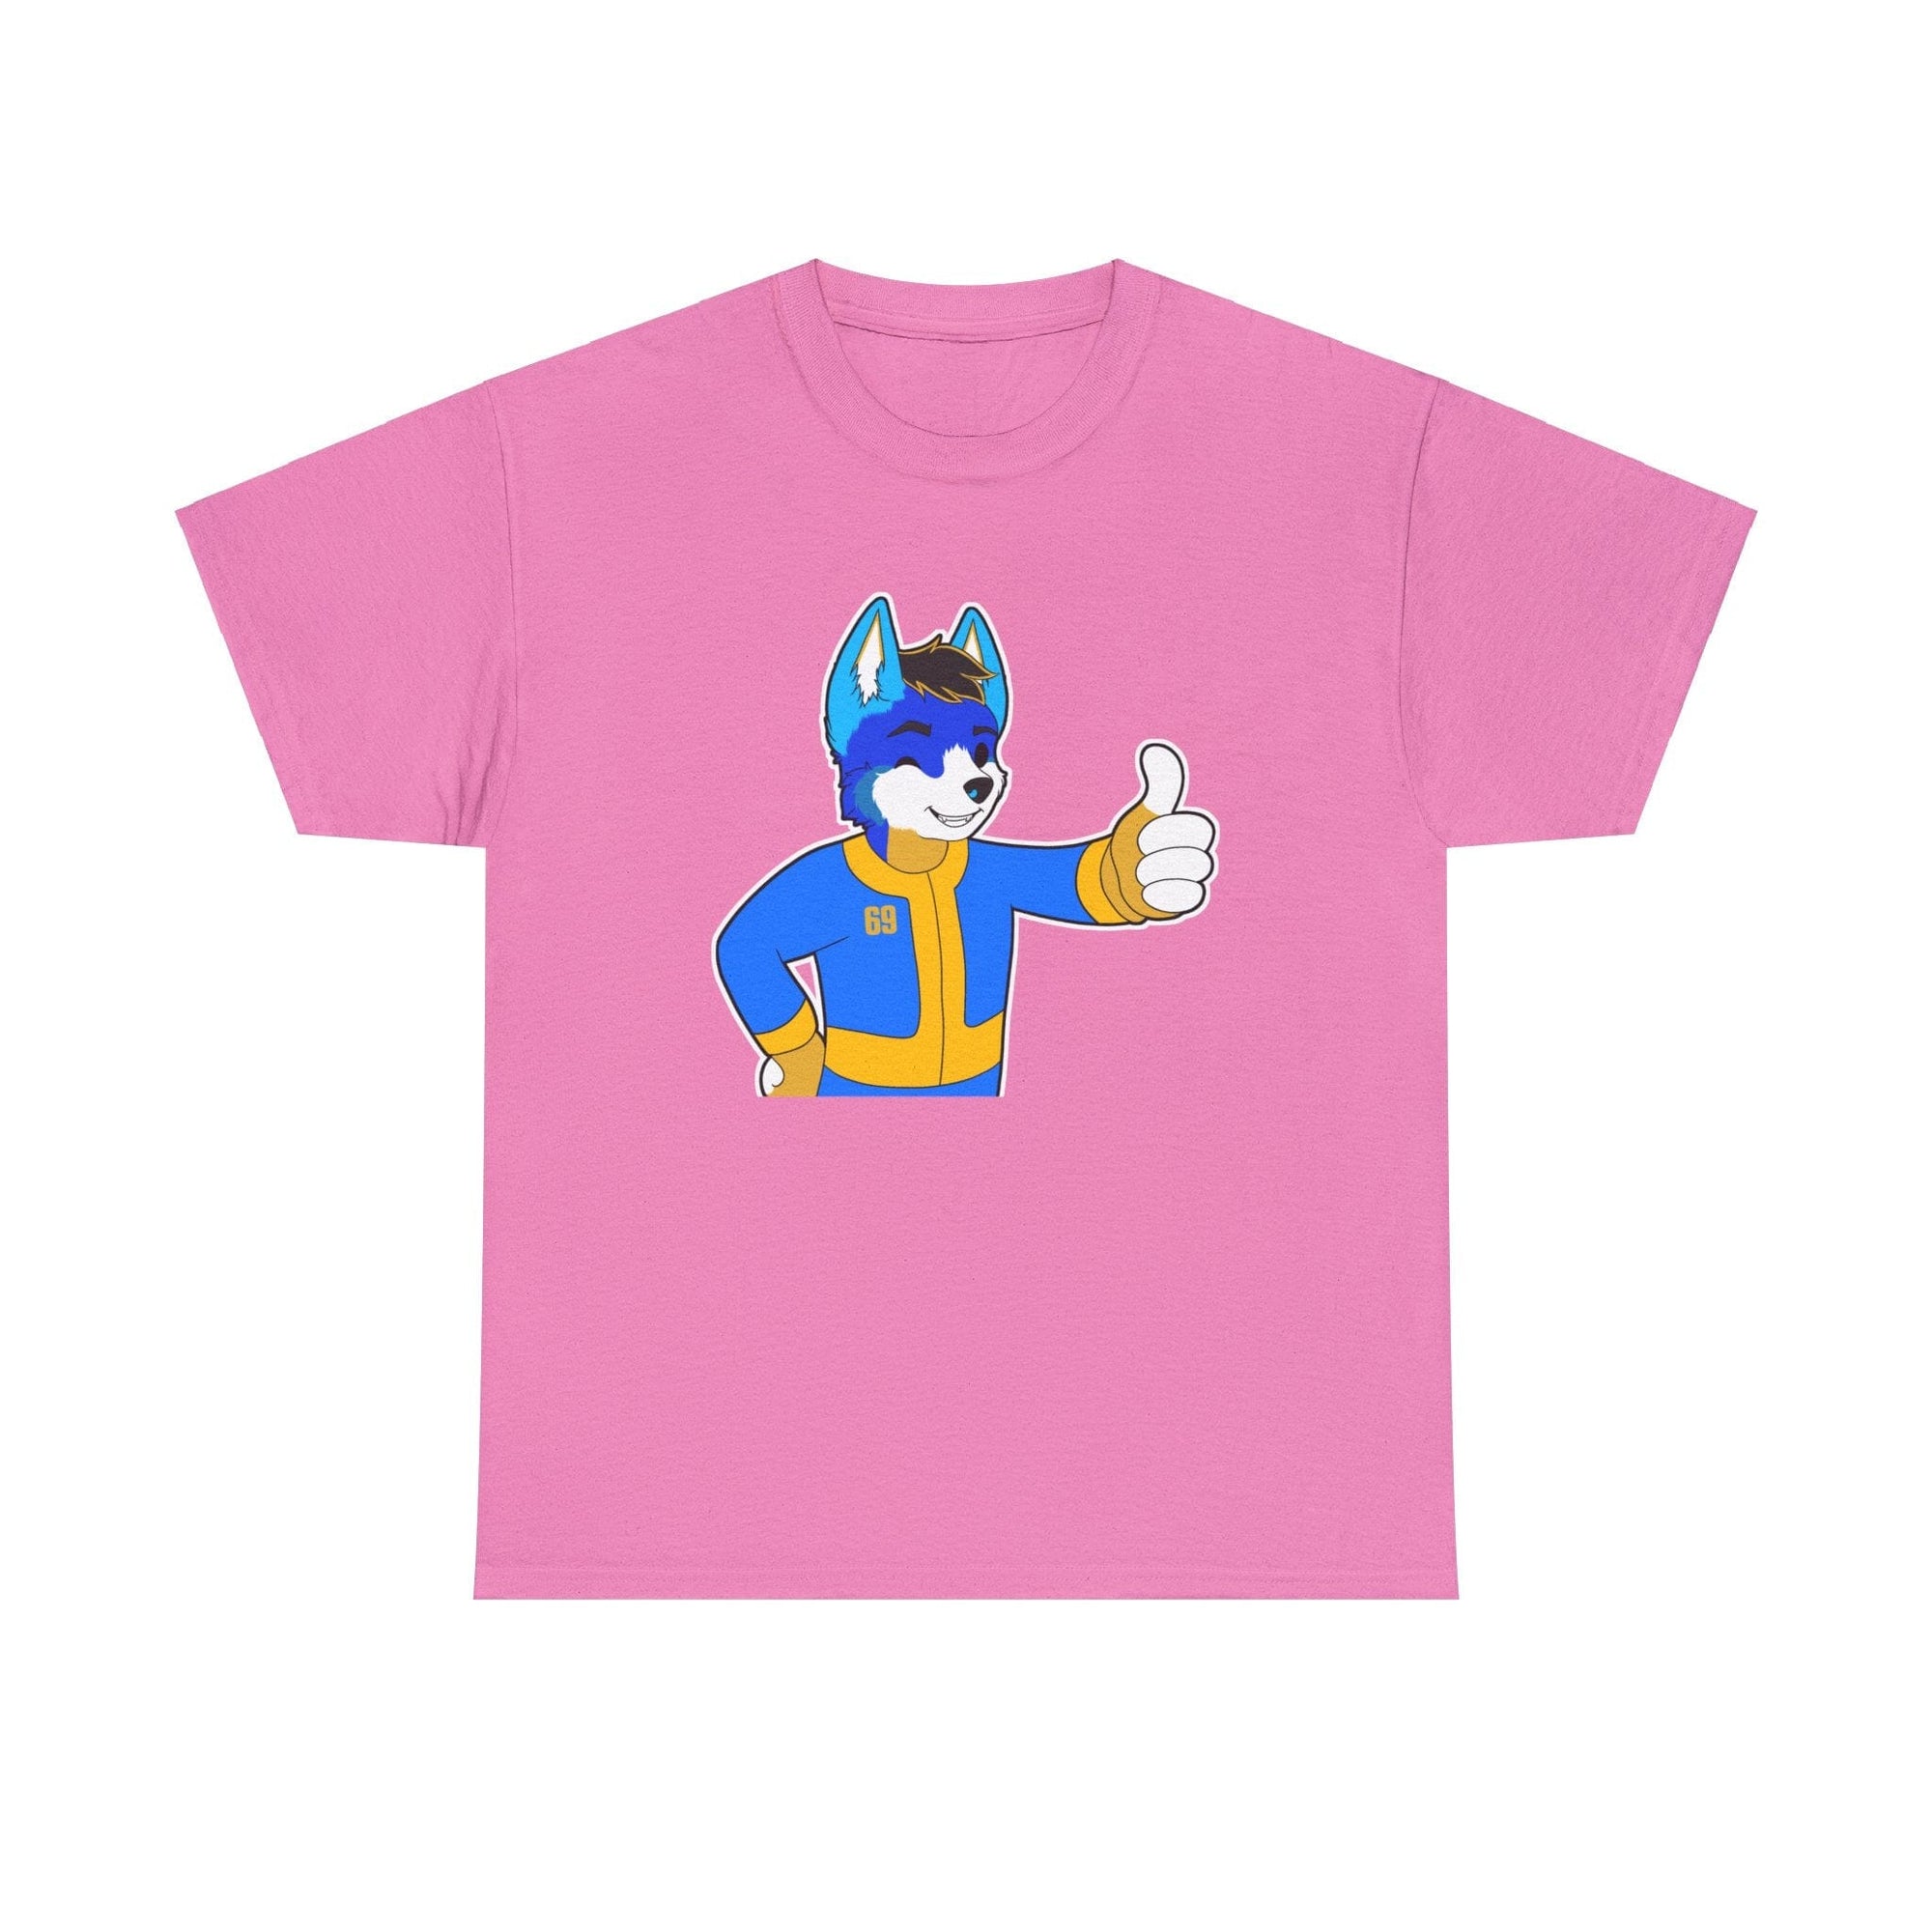 FALLOUT HUND - T-Shirt T-Shirt AFLT-Hund The Hound Pink S 